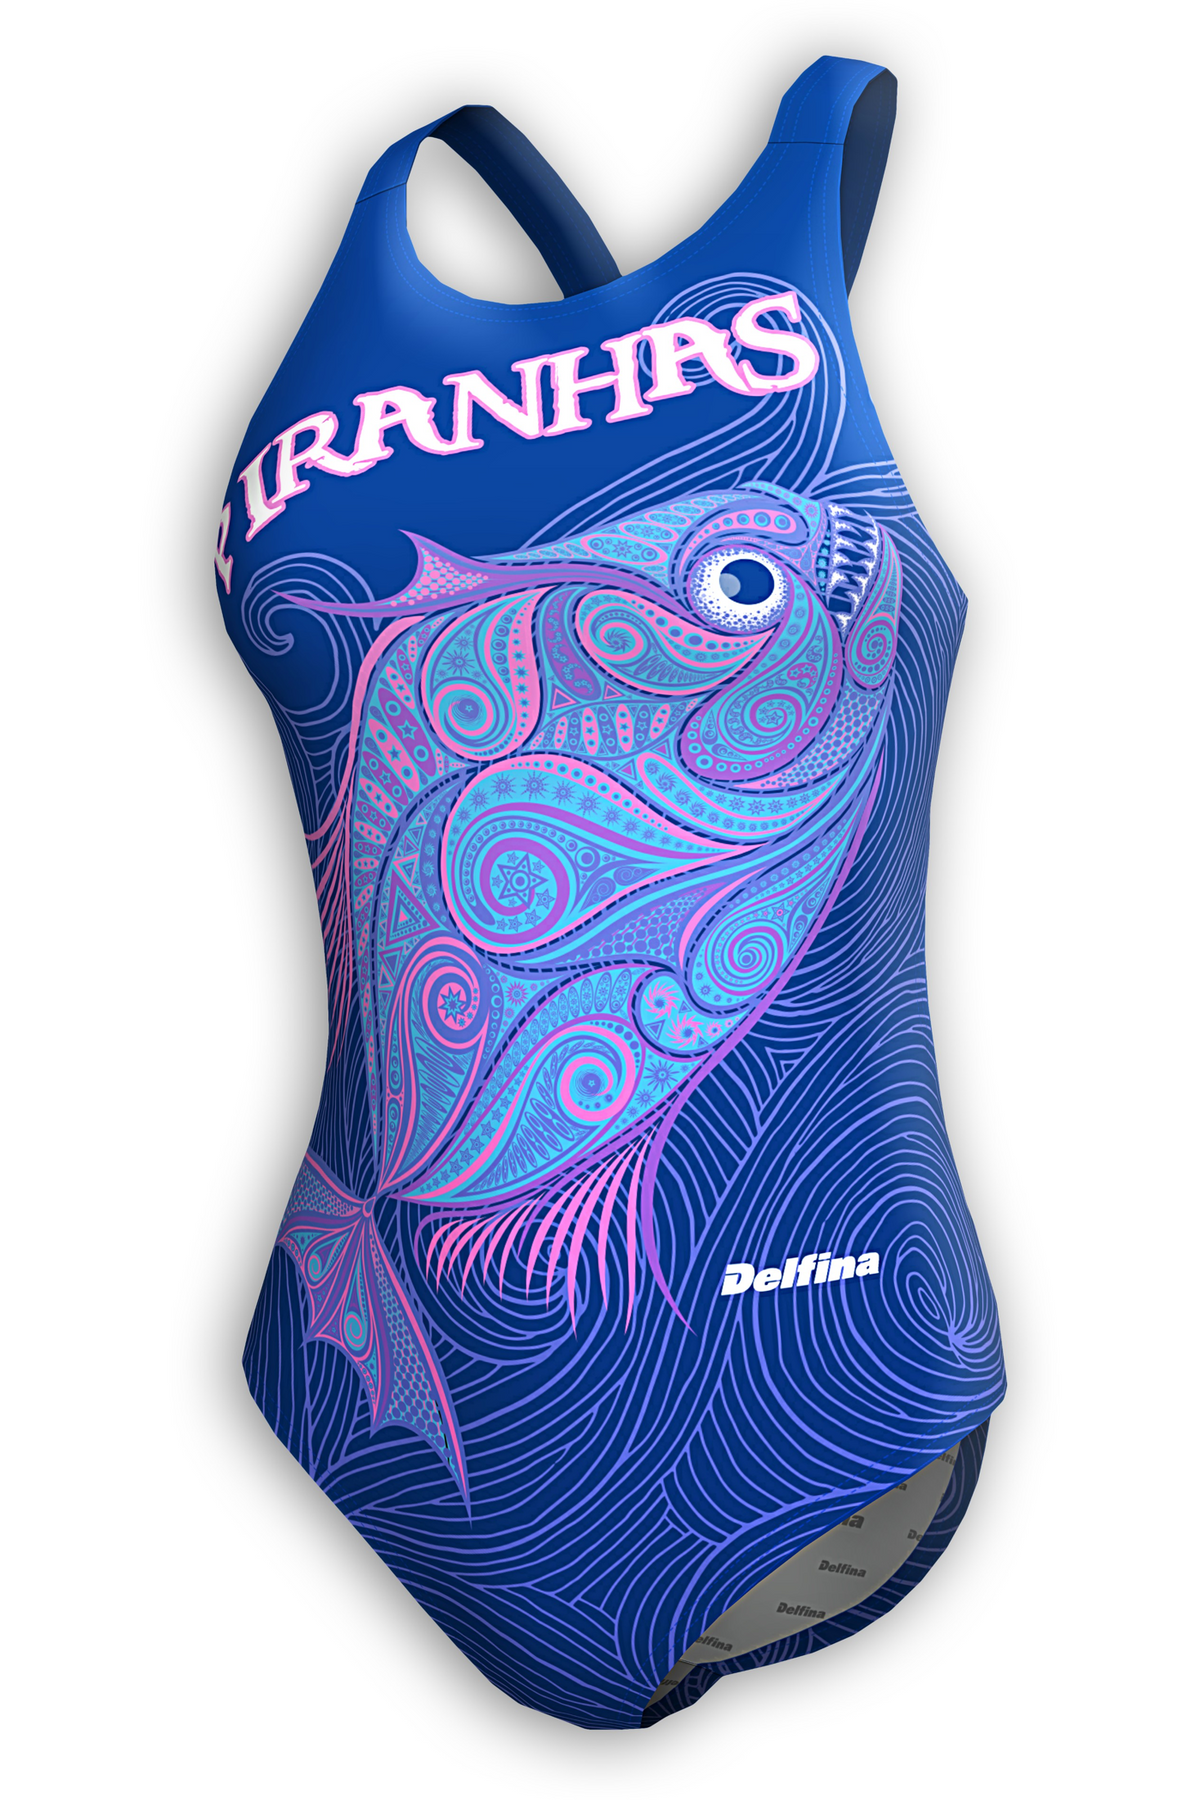 custom racing suits swimming